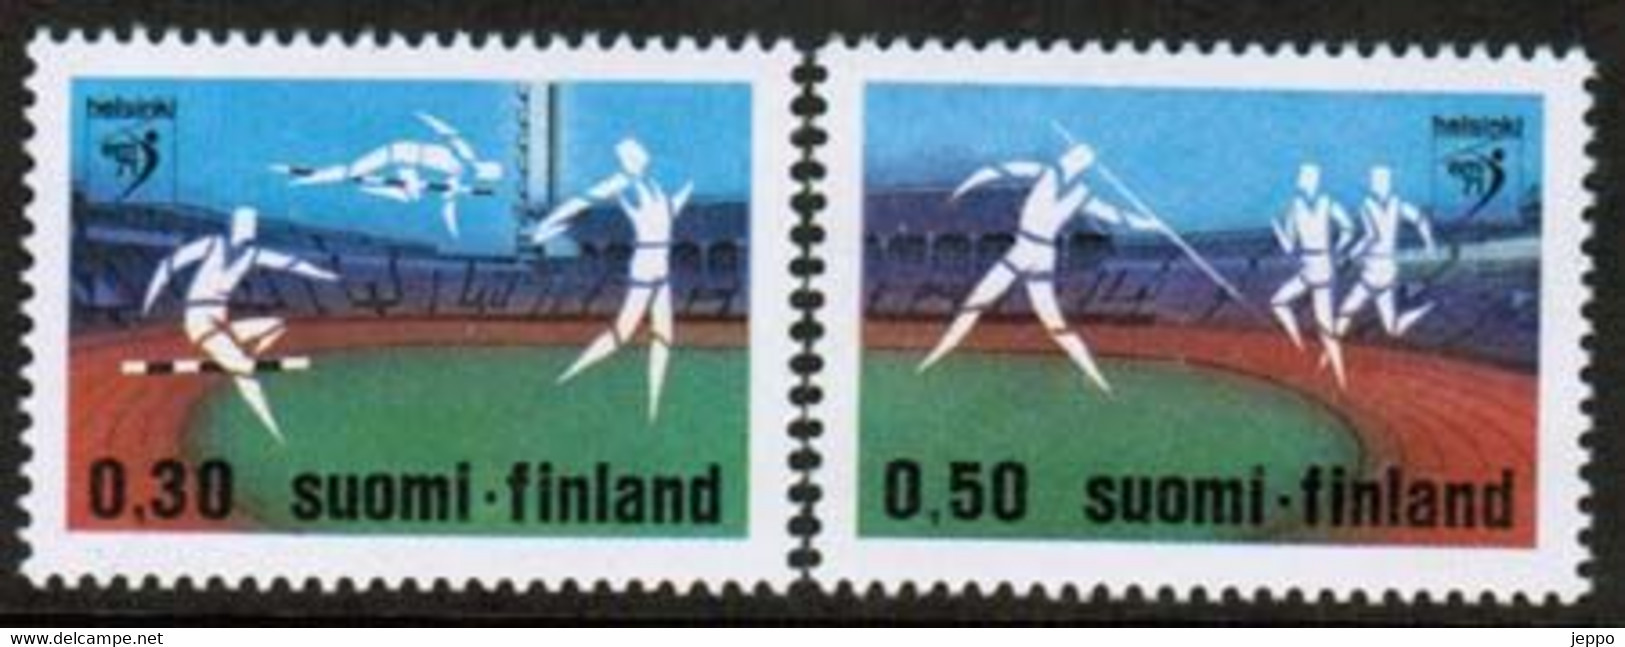 1971 Finland European Athletic Shampionships Complete Set MNH. - Nuovi